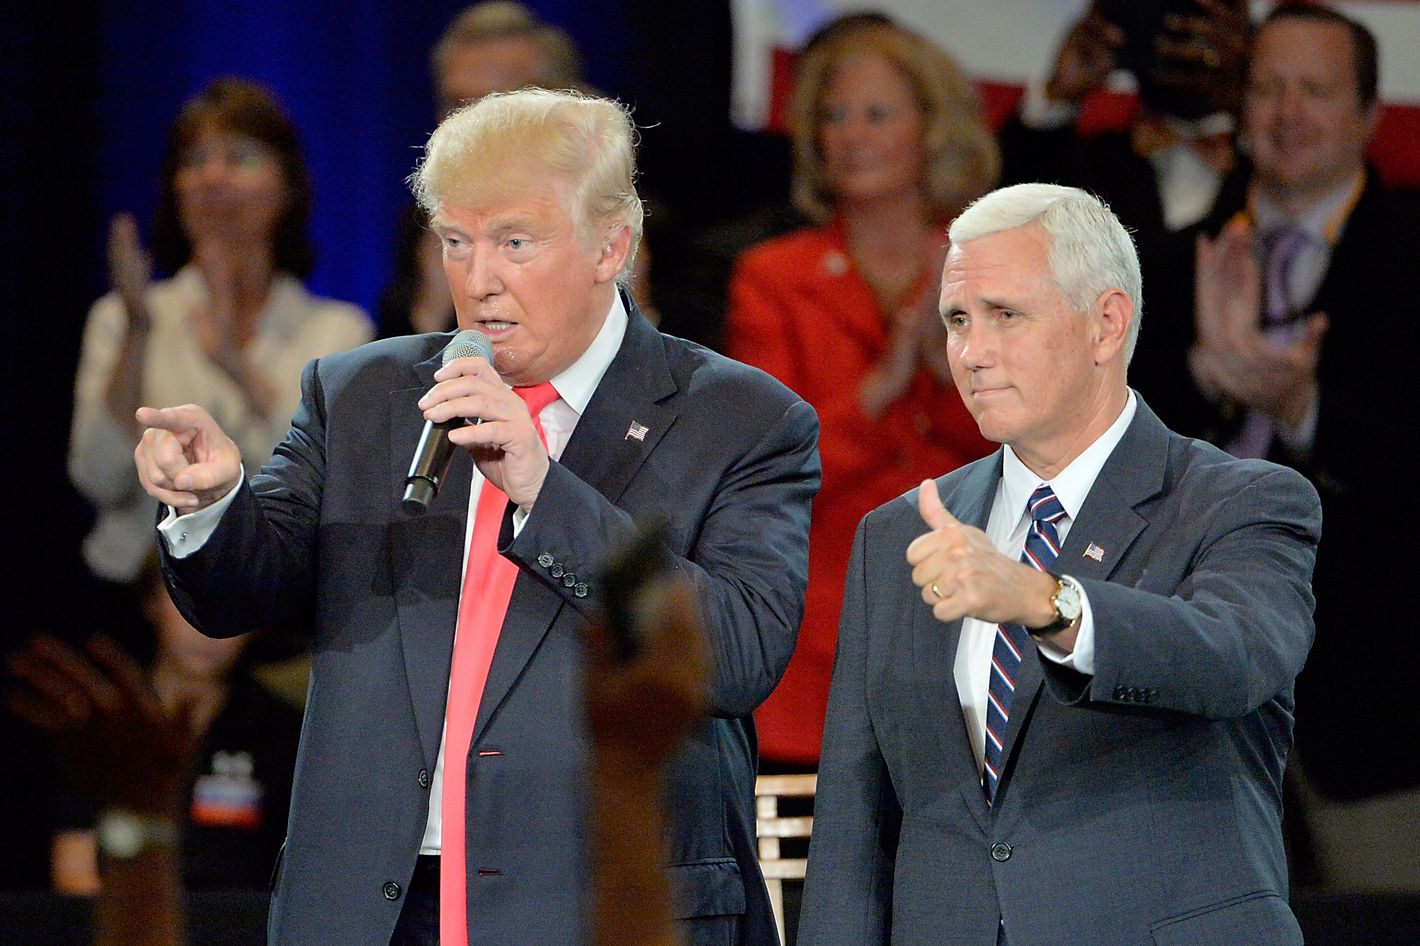 Donald Trump Begins Post-Convention Campaign Swing in Roanoke, VA